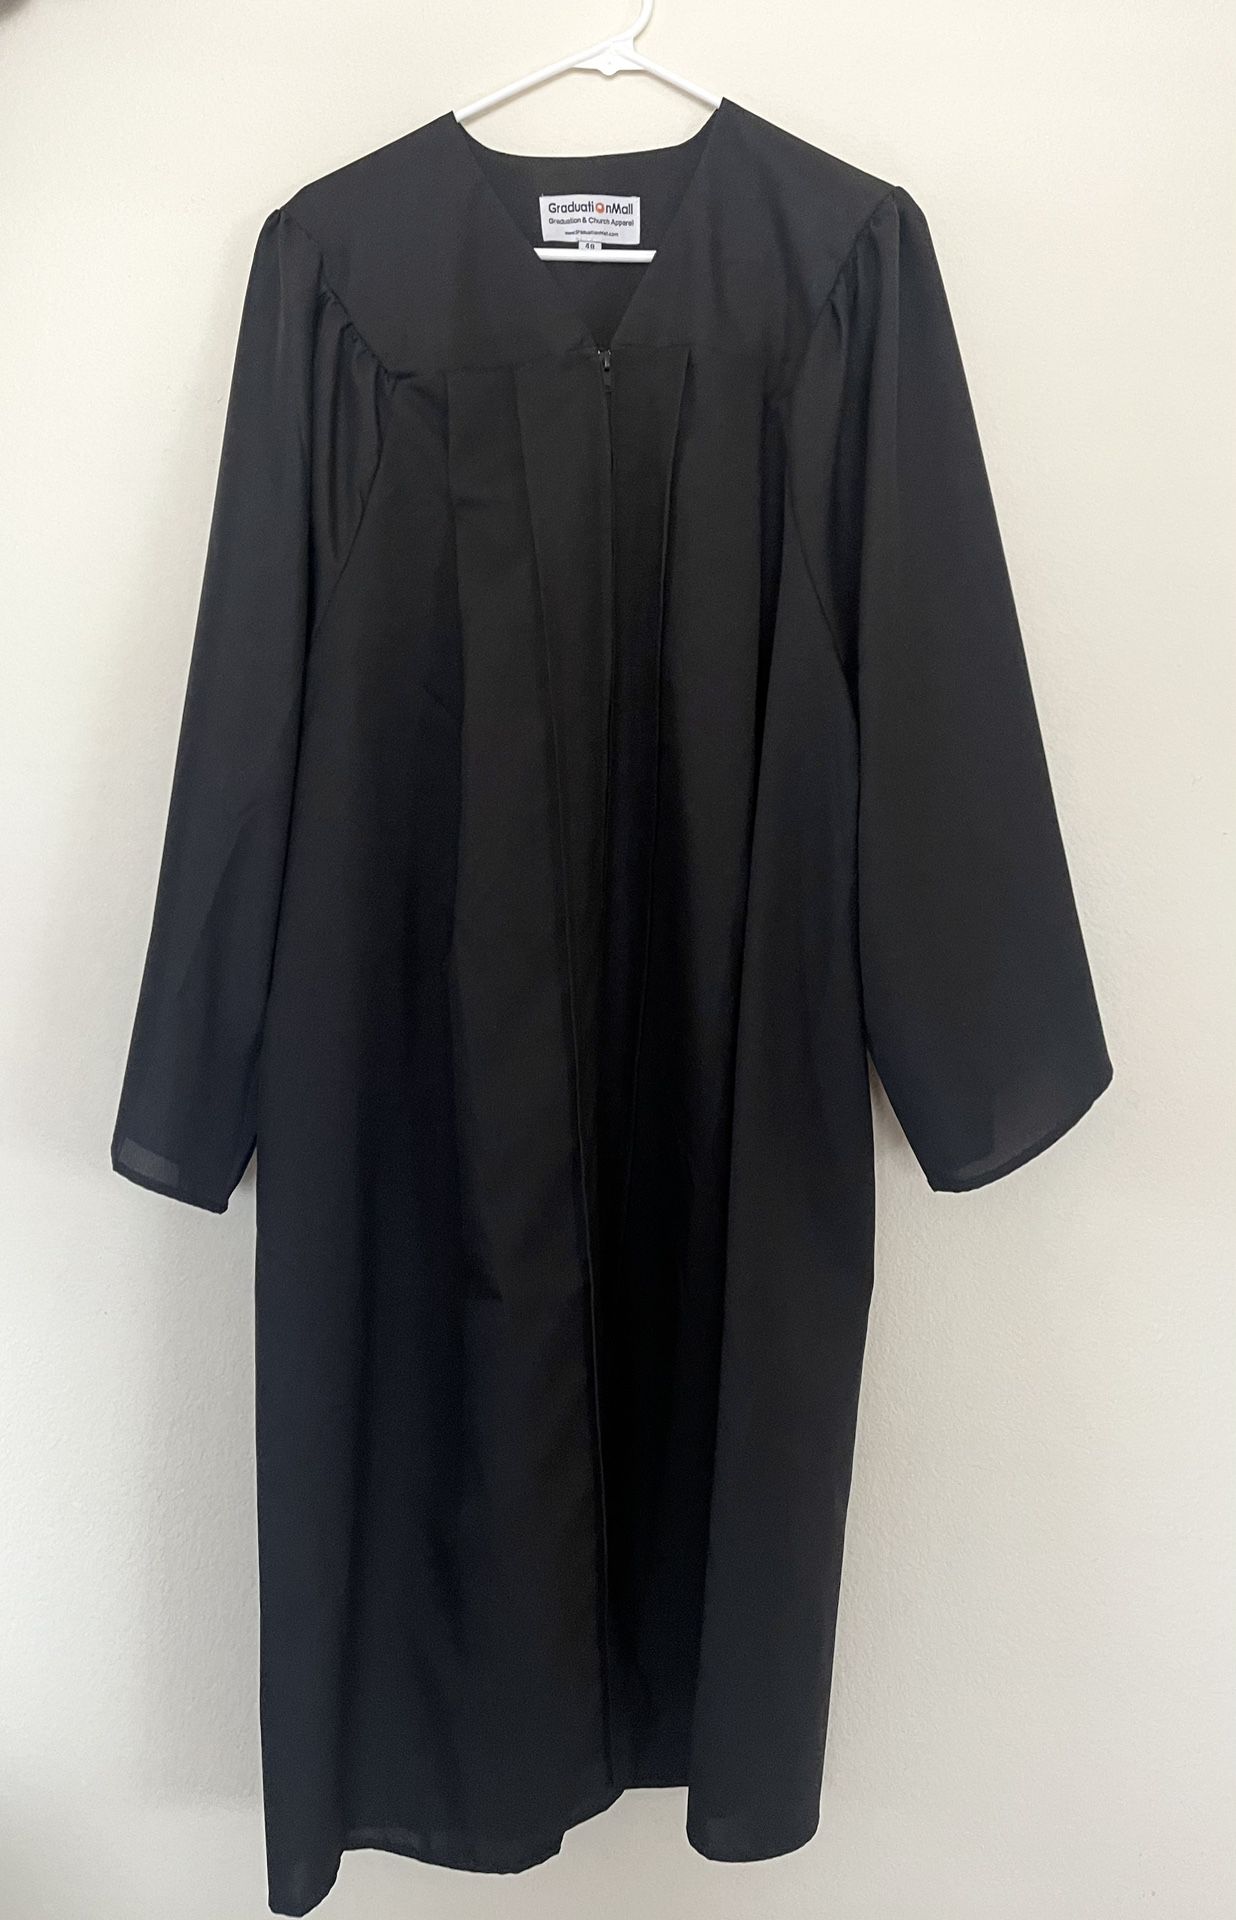 Graduation Cap And Gown (Black)